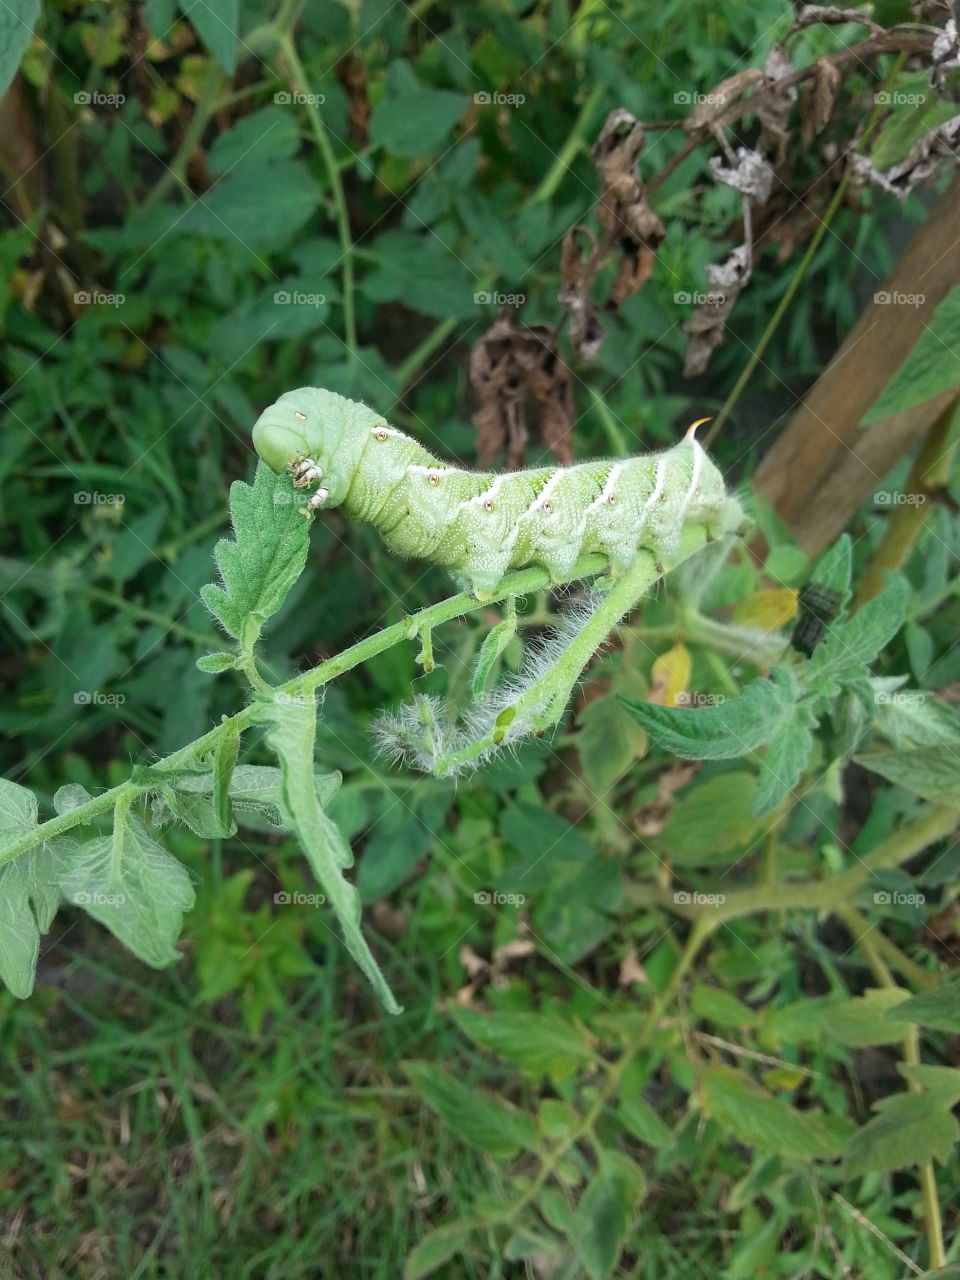 garden worm. on a tomatoe bush